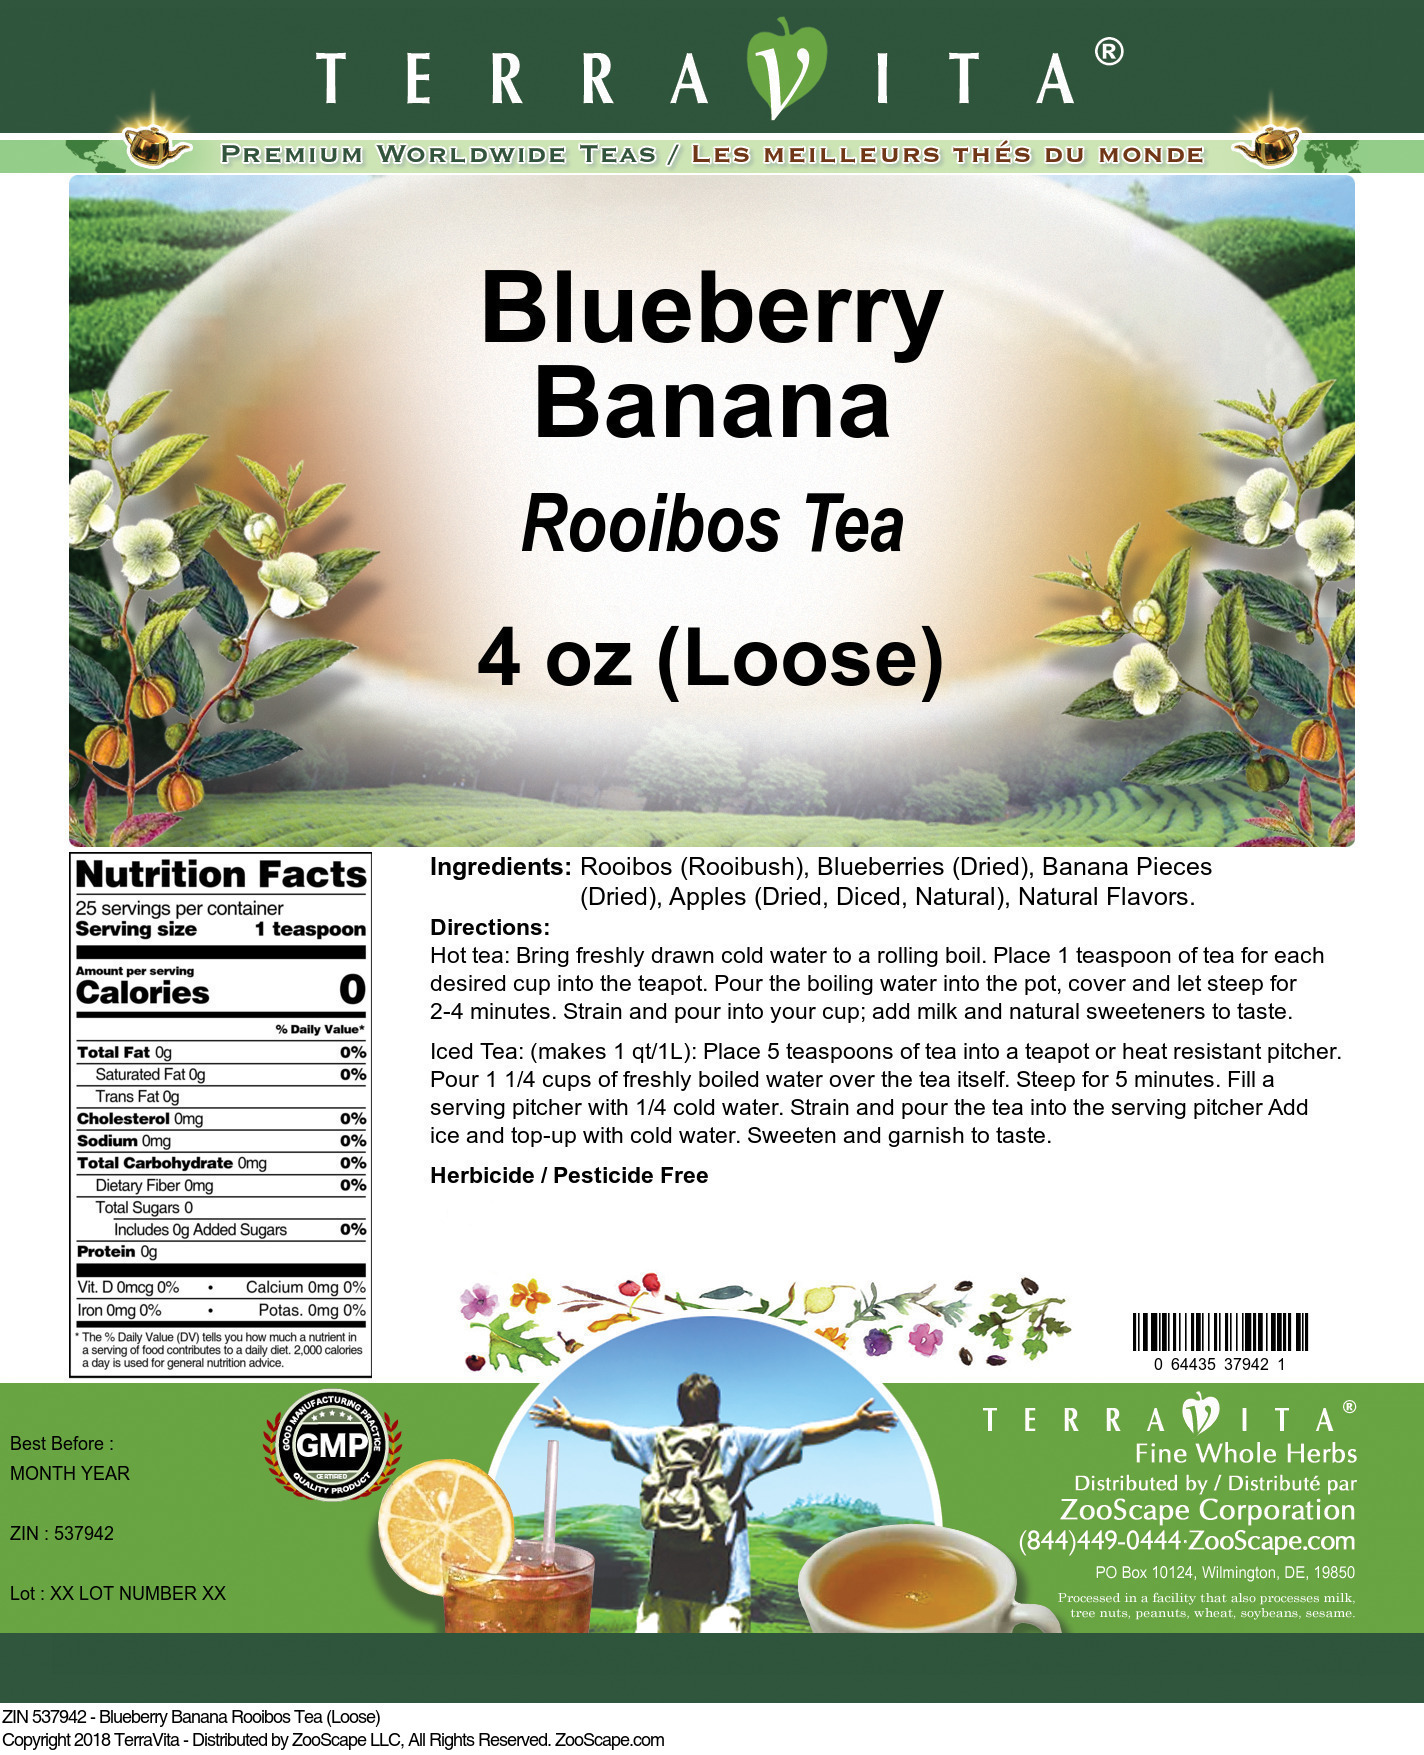 Blueberry Banana Rooibos Tea (Loose) - Label